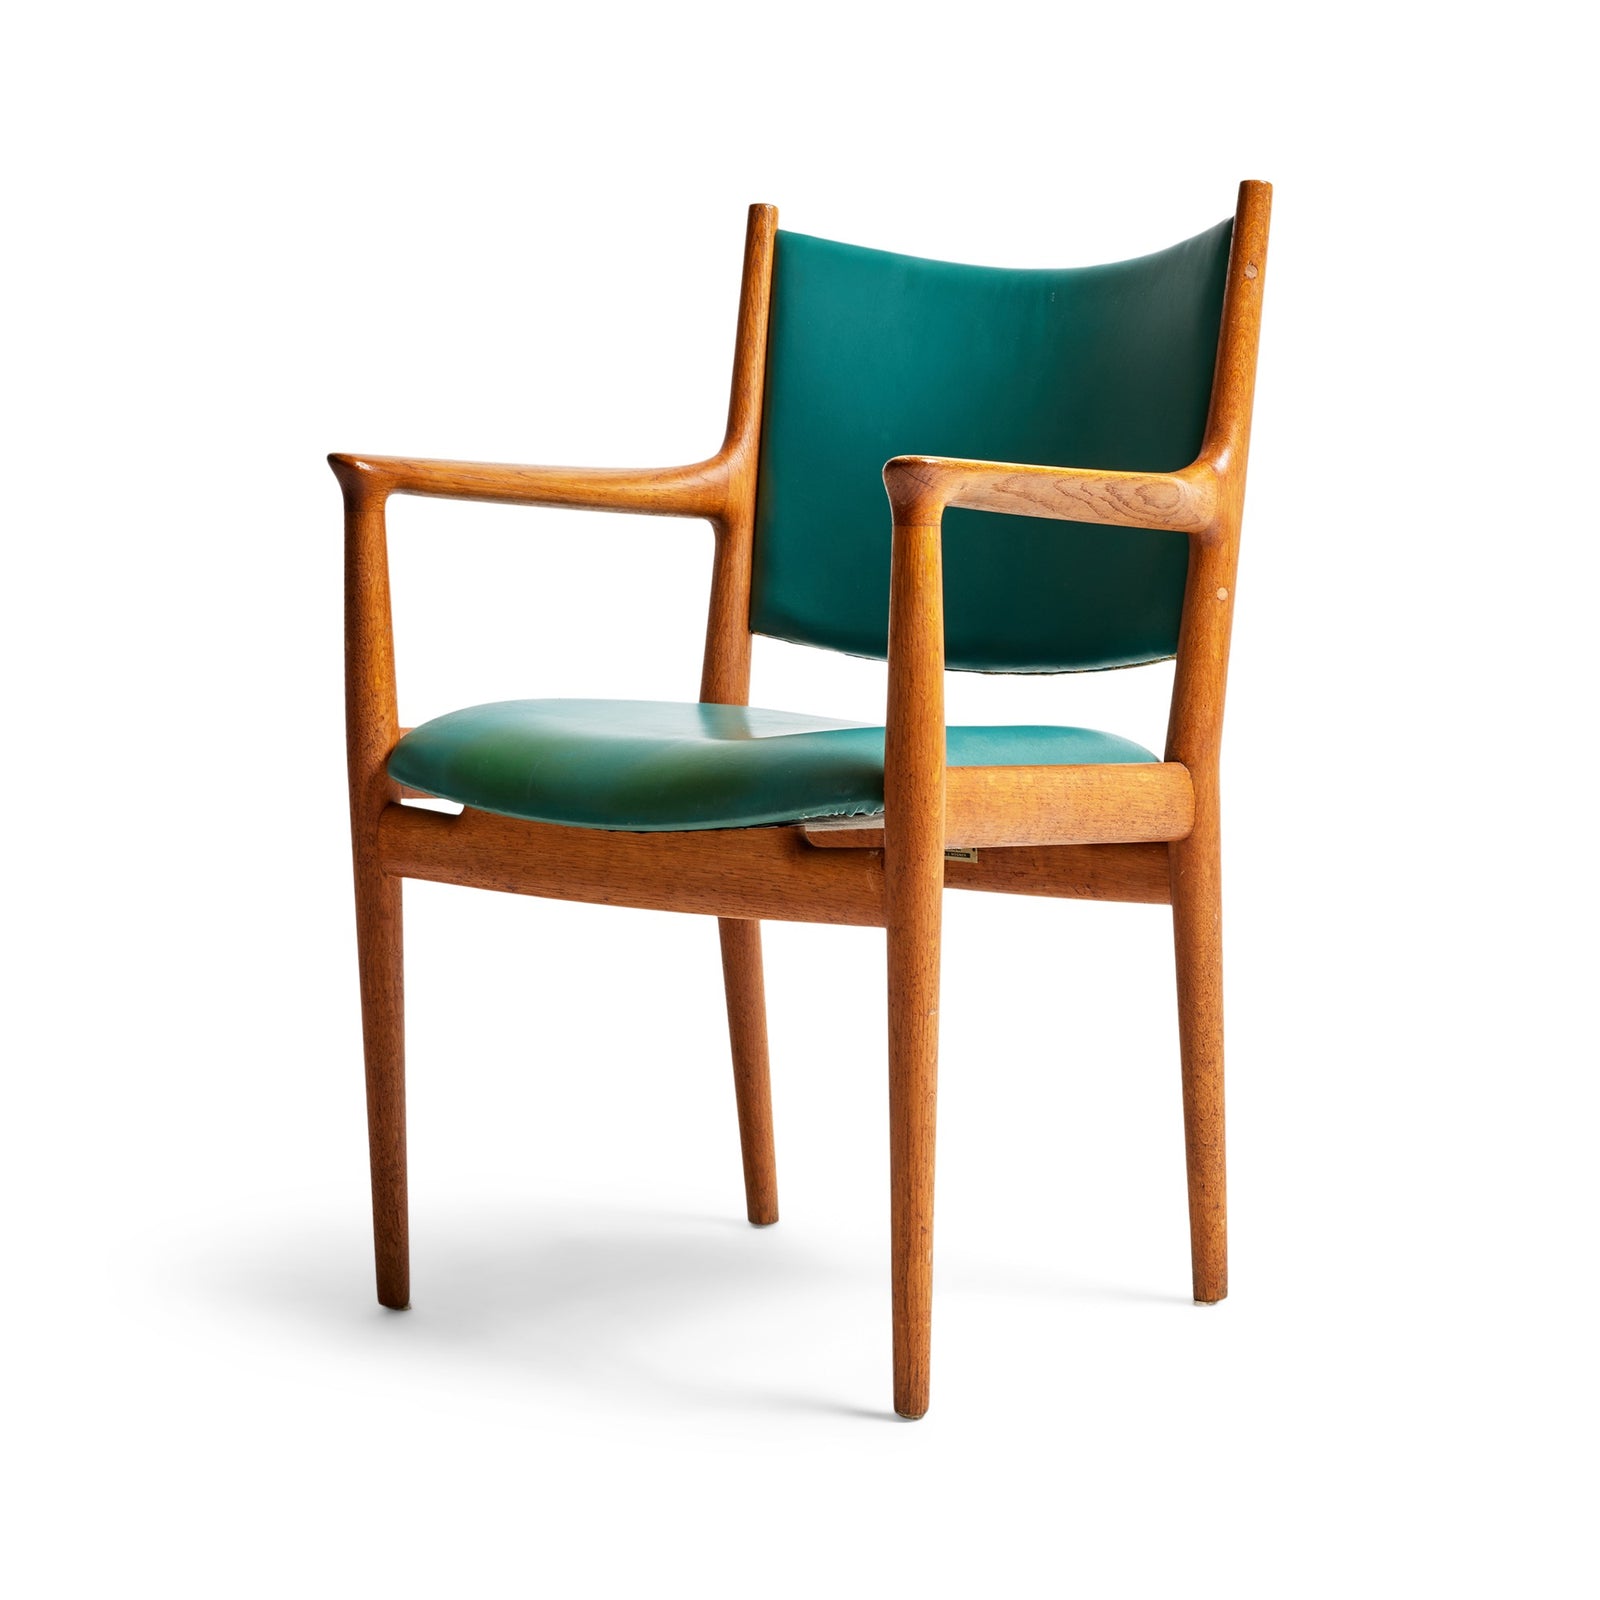 Dining Chairs - Foreward - HM Binder Catalog - 1964 